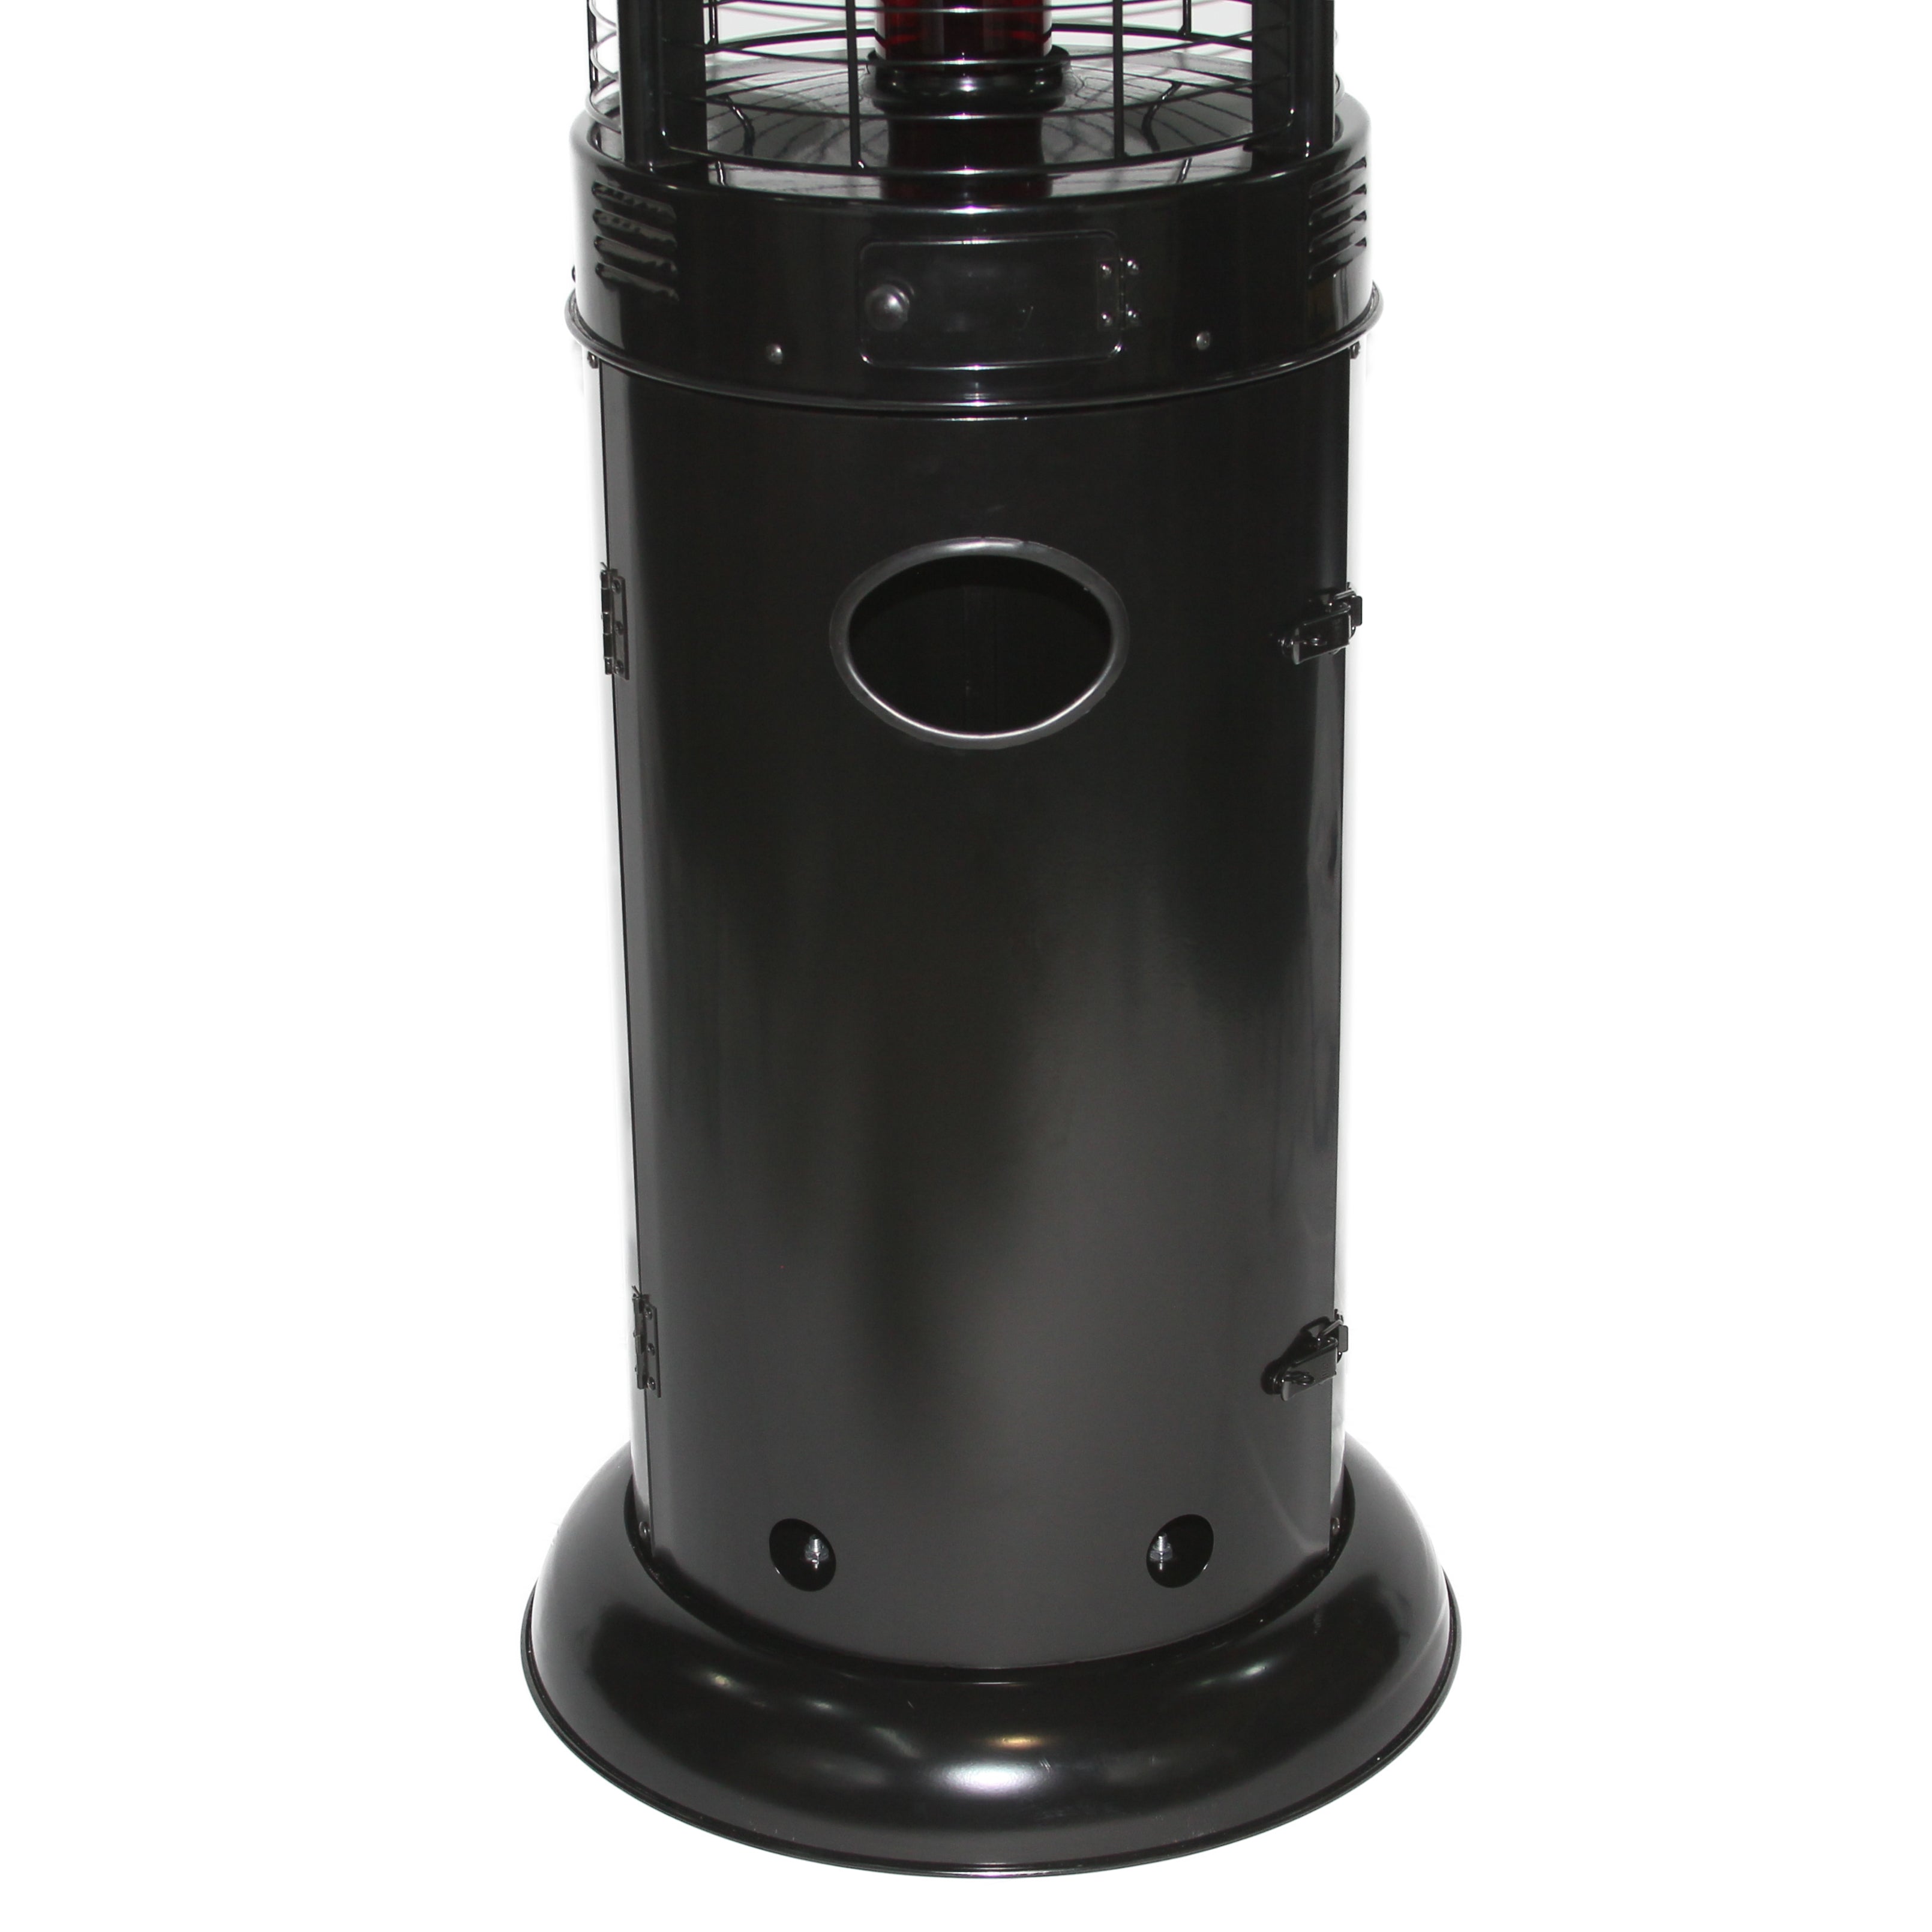 RADtec 80 Ellipse Flame Propane Patio Heater - Black with Ruby Glass 41,000 BTU  - 80-ELL-FLM-HT - Tank View